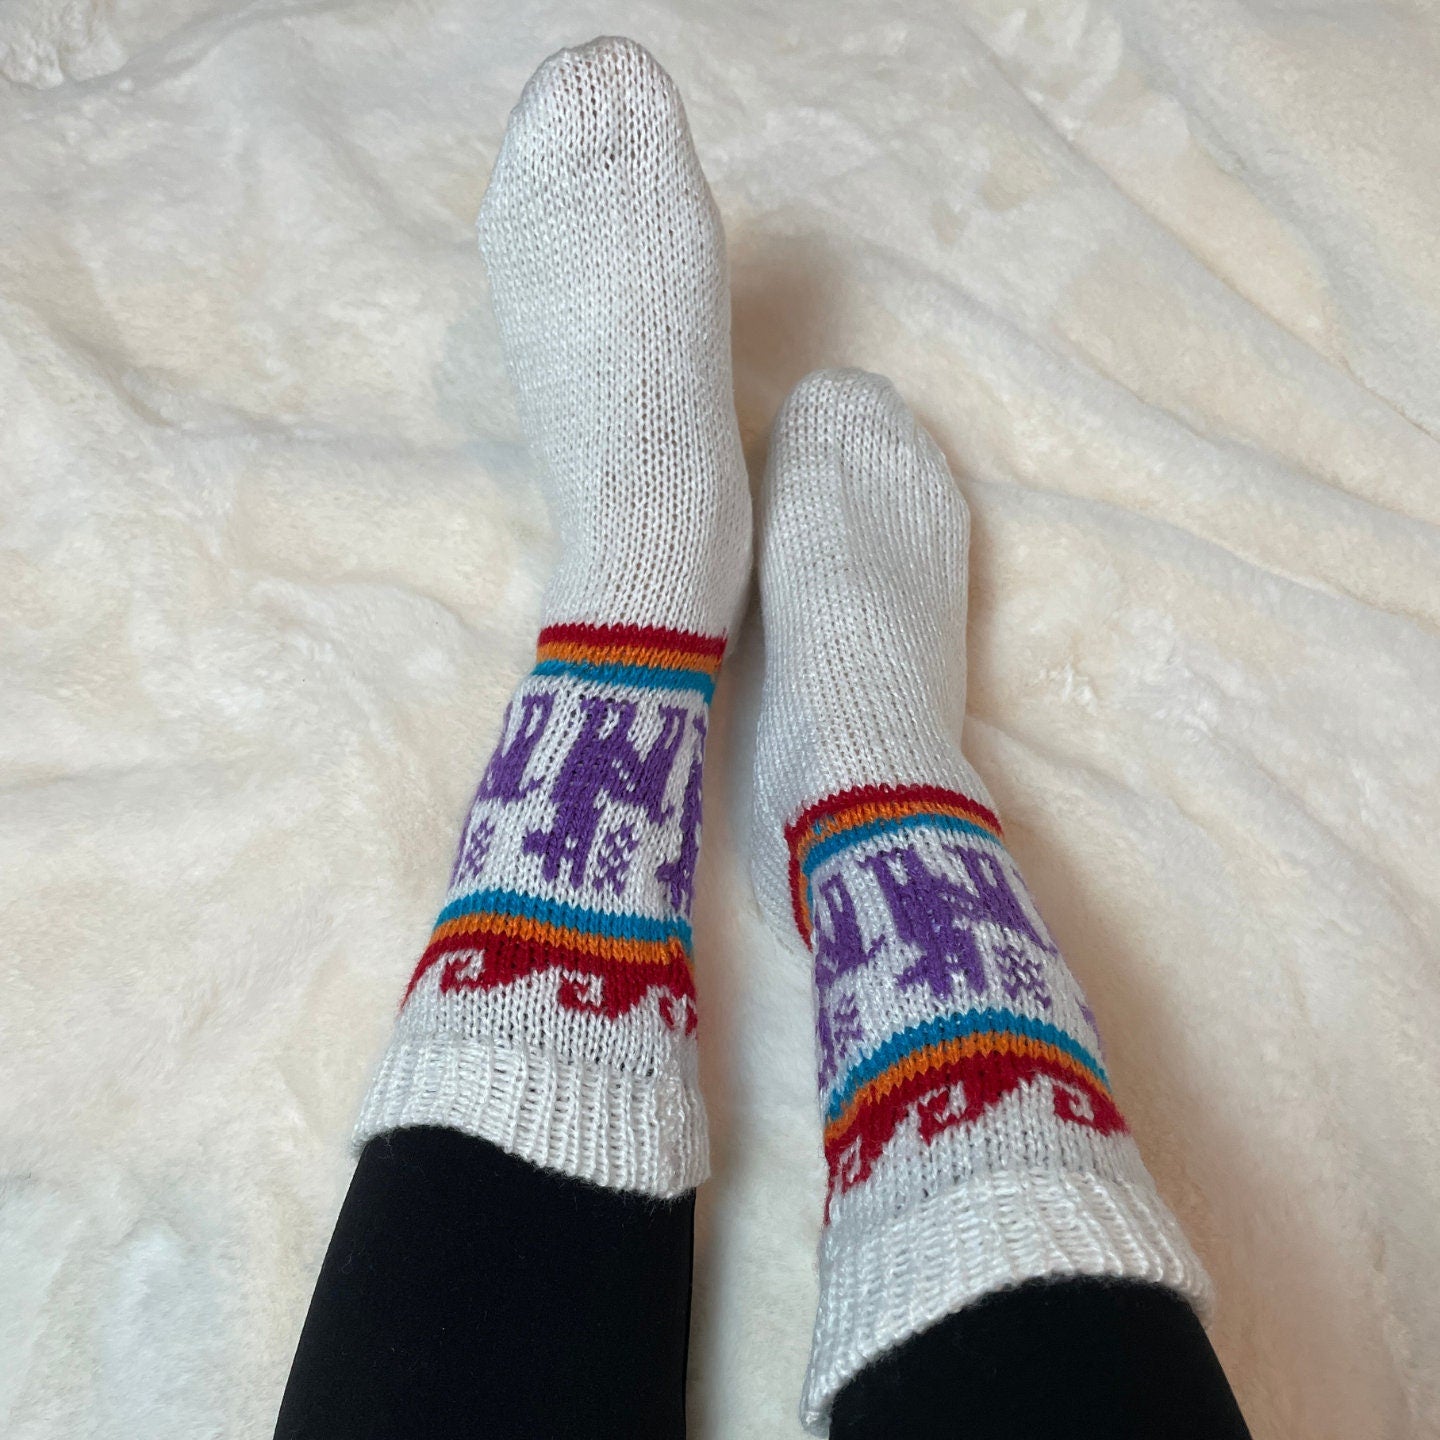 Warm Soft Winter Colorful Mid Calf Socks | Size 9-10 US Adult Socks